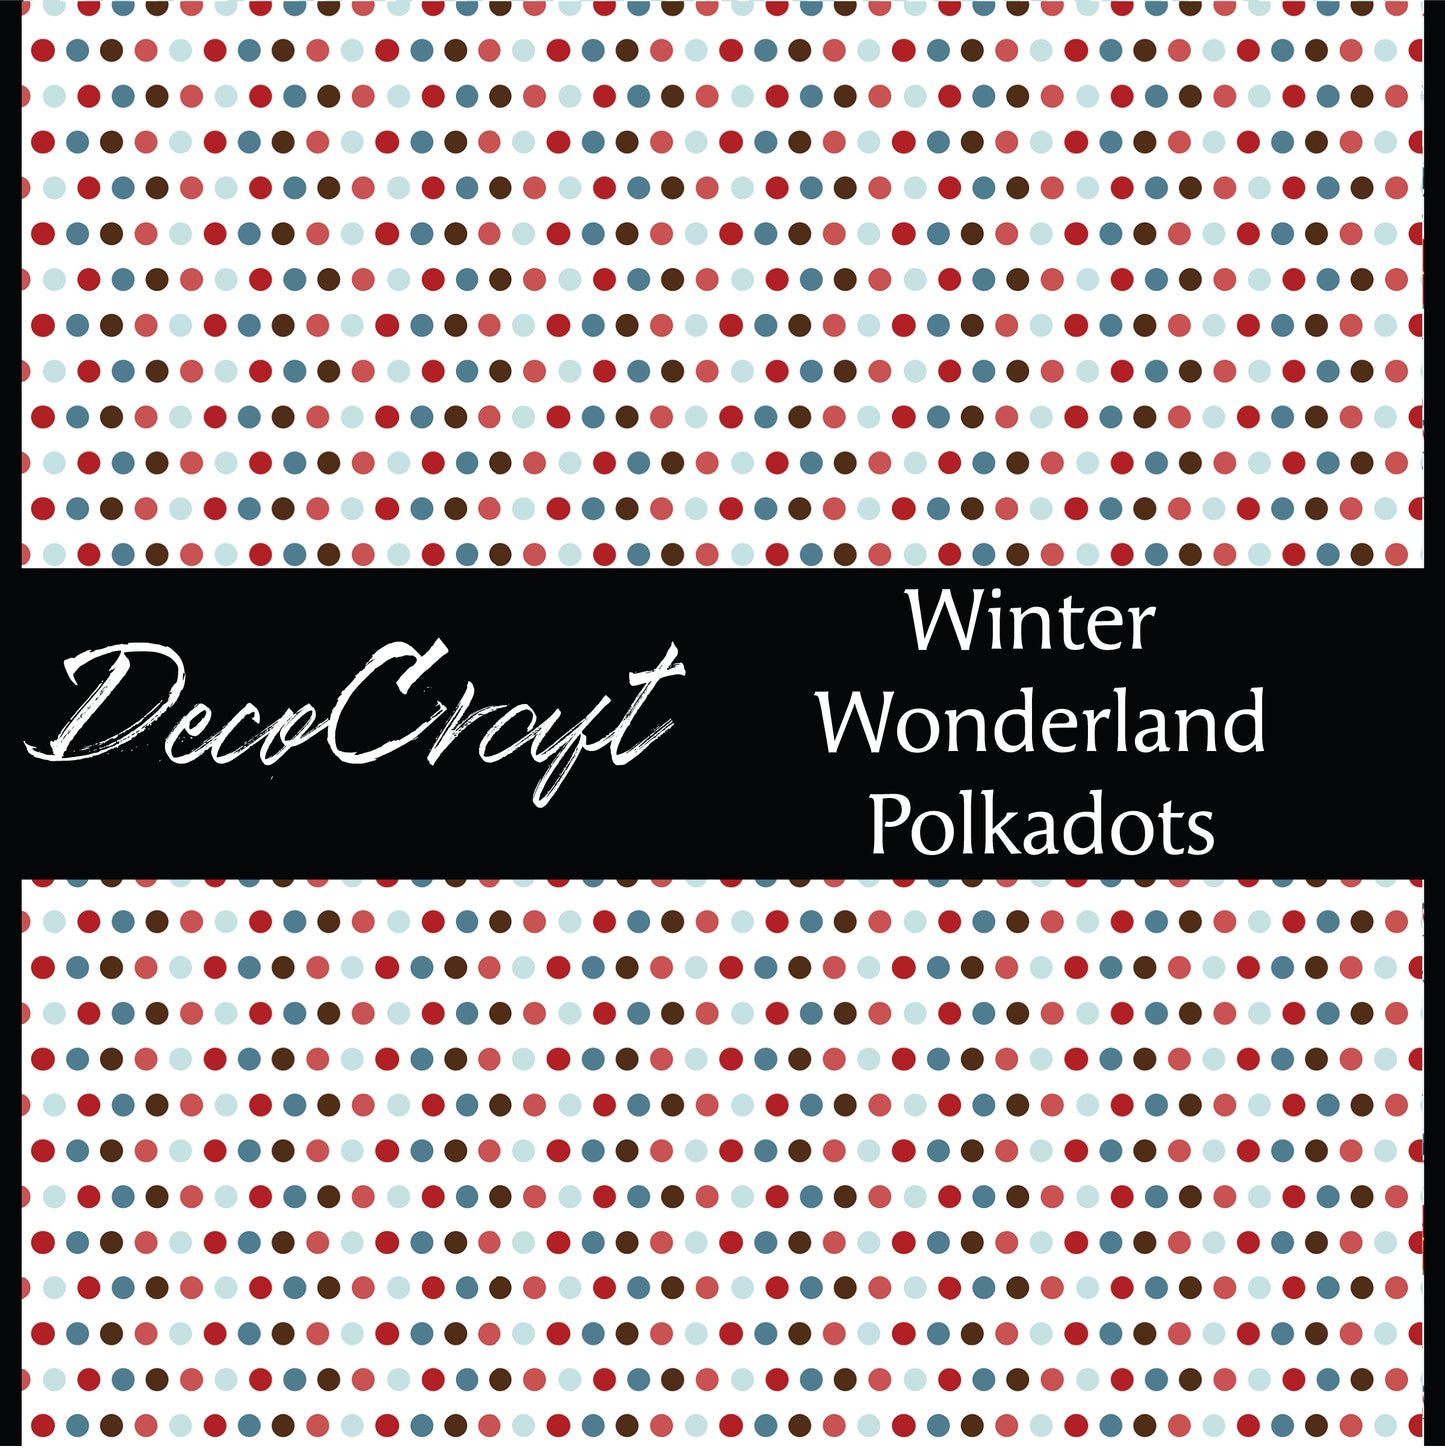 DecoCraft - Christmas - Winter Wonderland - Polkadots